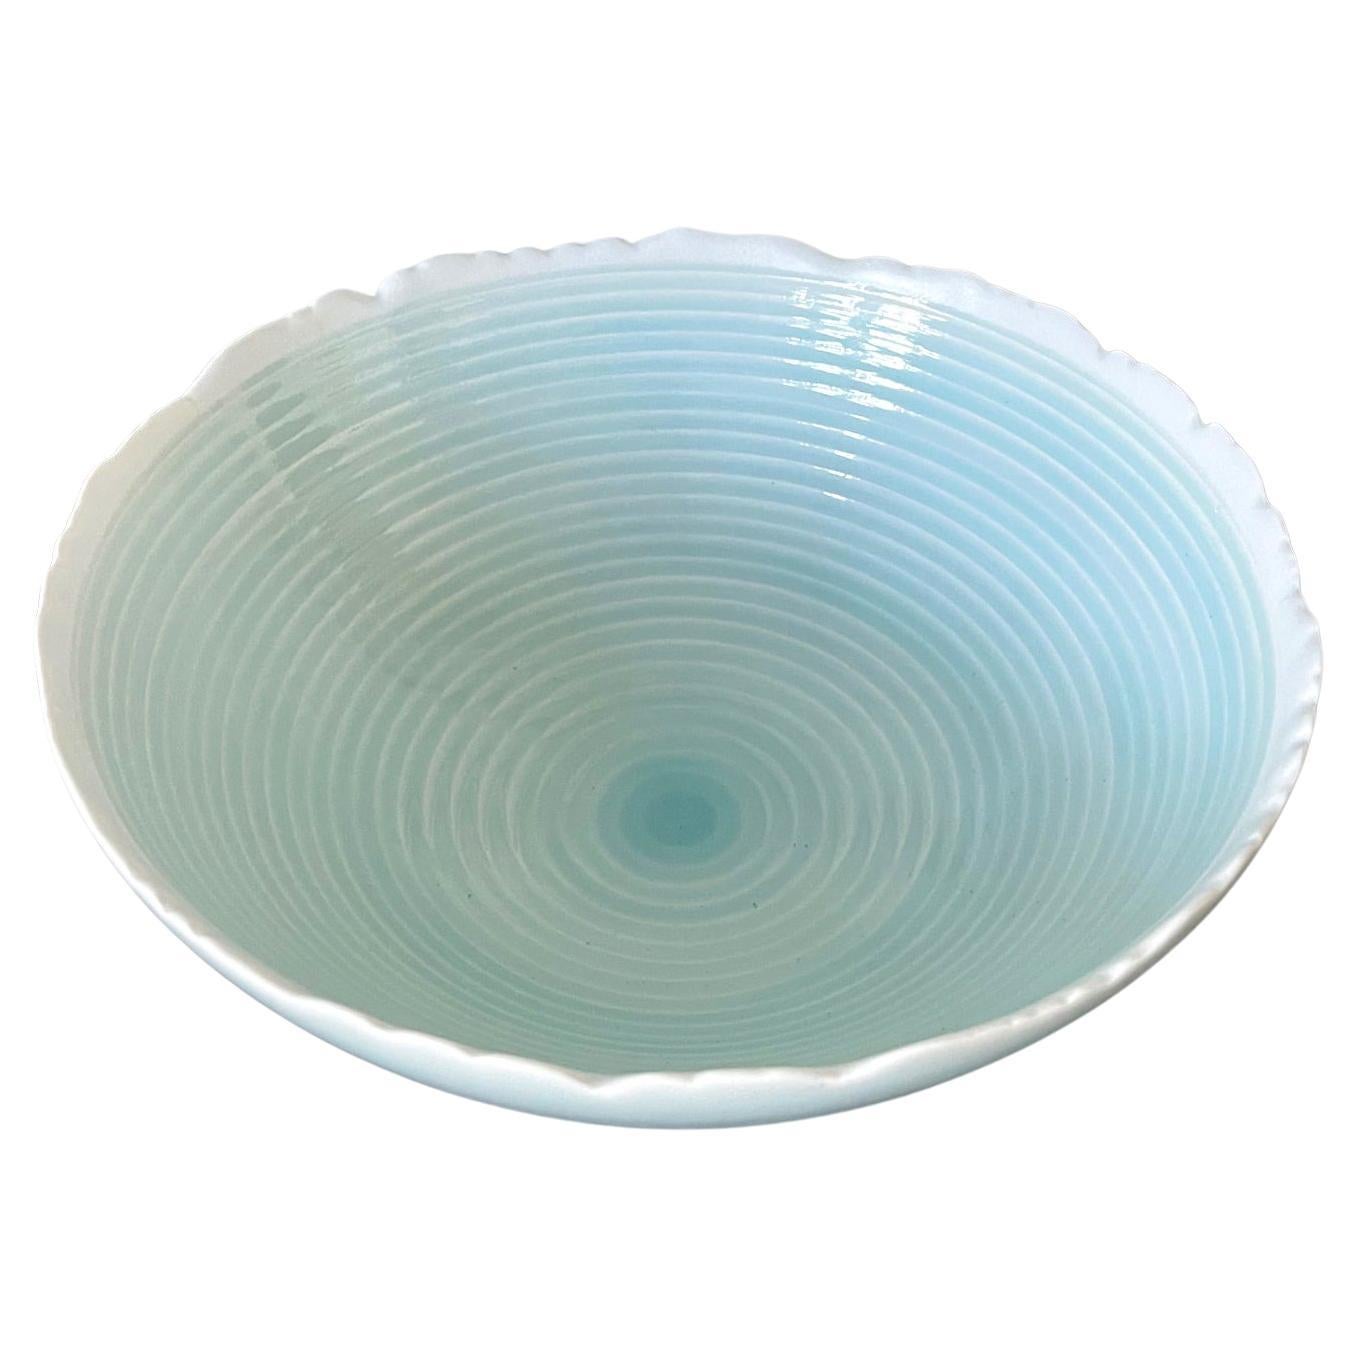 Japanese Contemporary Celadon Ceramic Bowl by Ono Kotaro